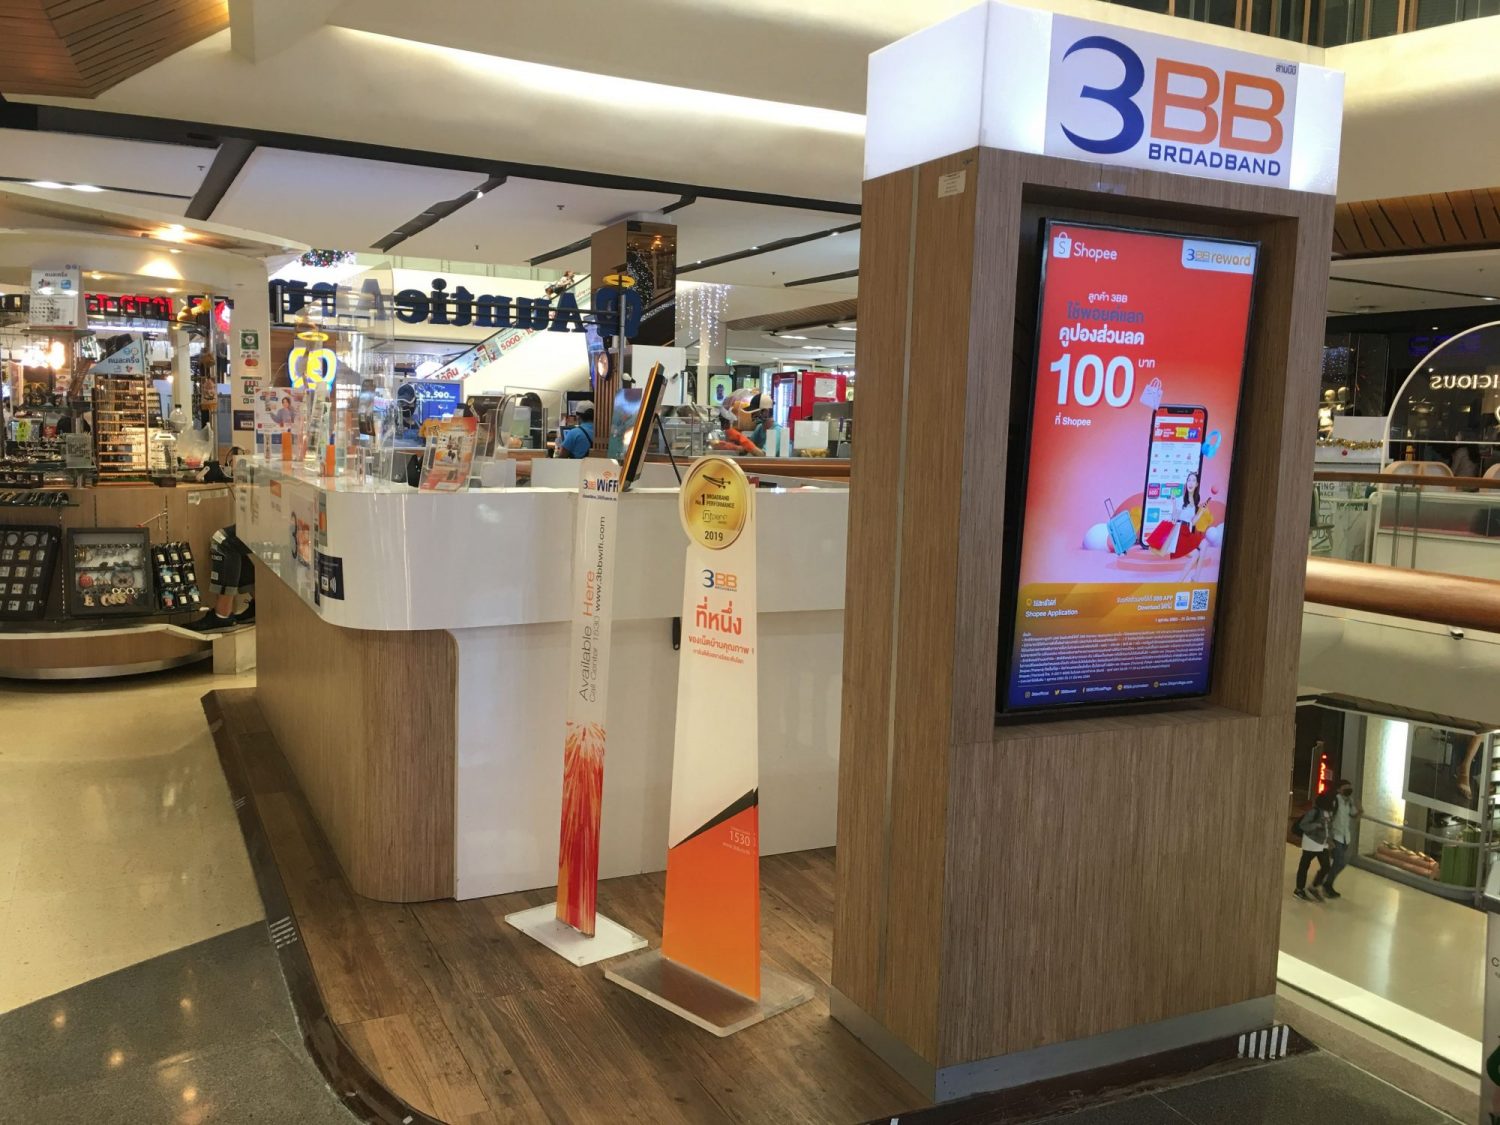 3bb ใช้ Digital Signage โฆษณาตาม Shop ทั่วประเทศ